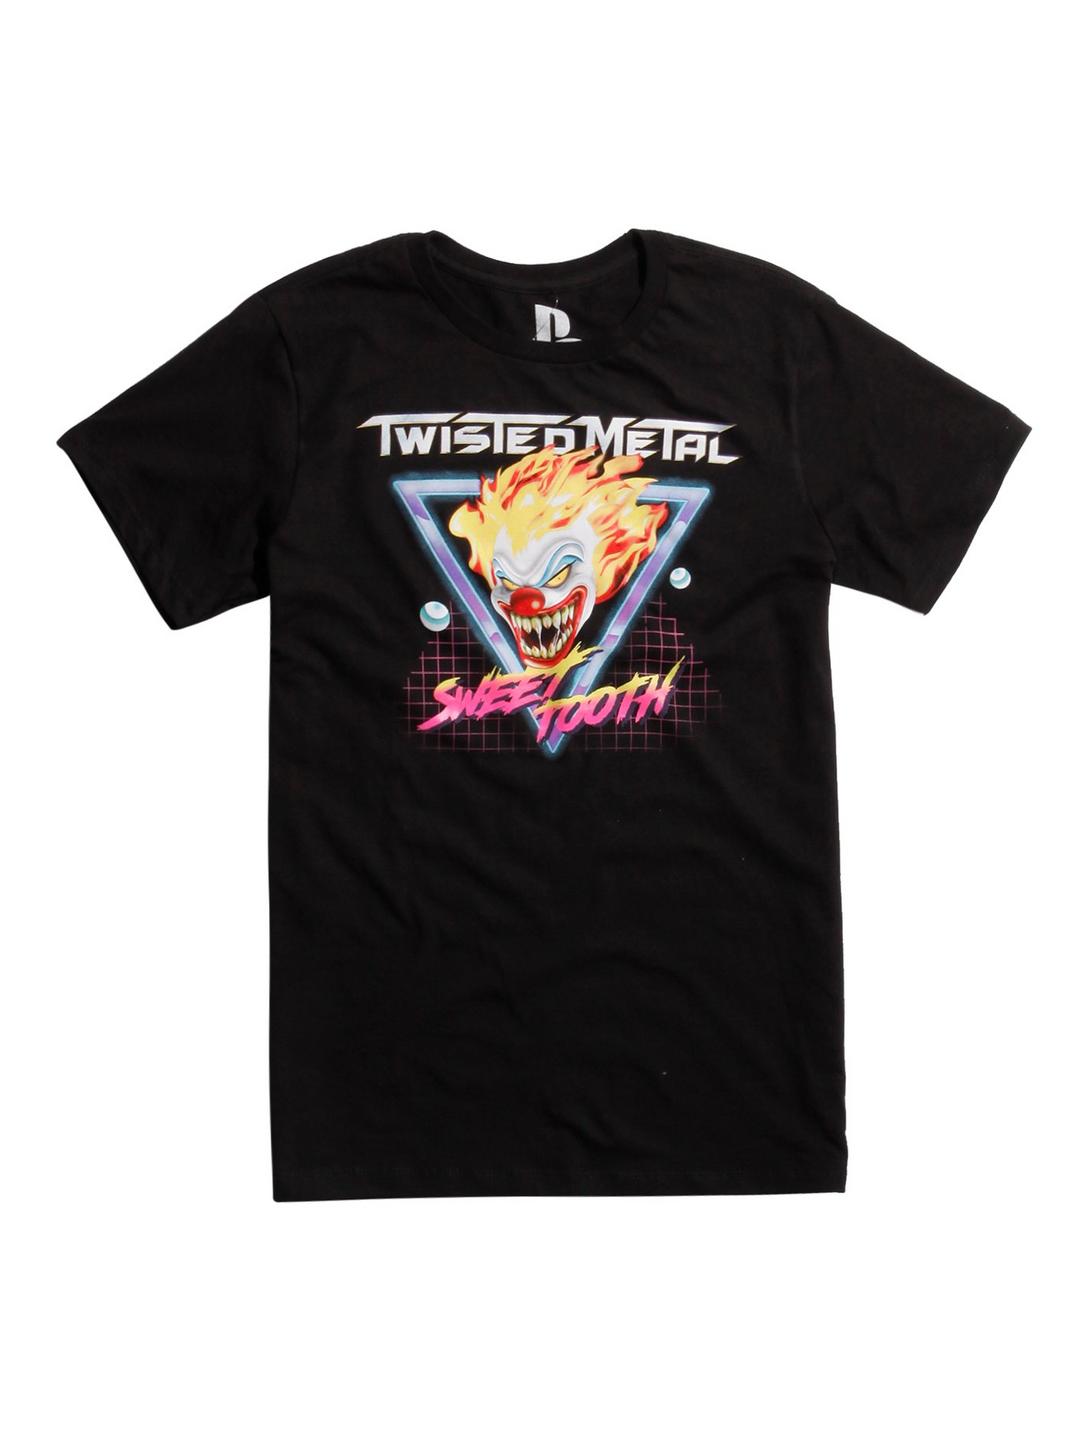 Twisted Metal Sweet Tooth T-Shirt, BLACK, hi-res